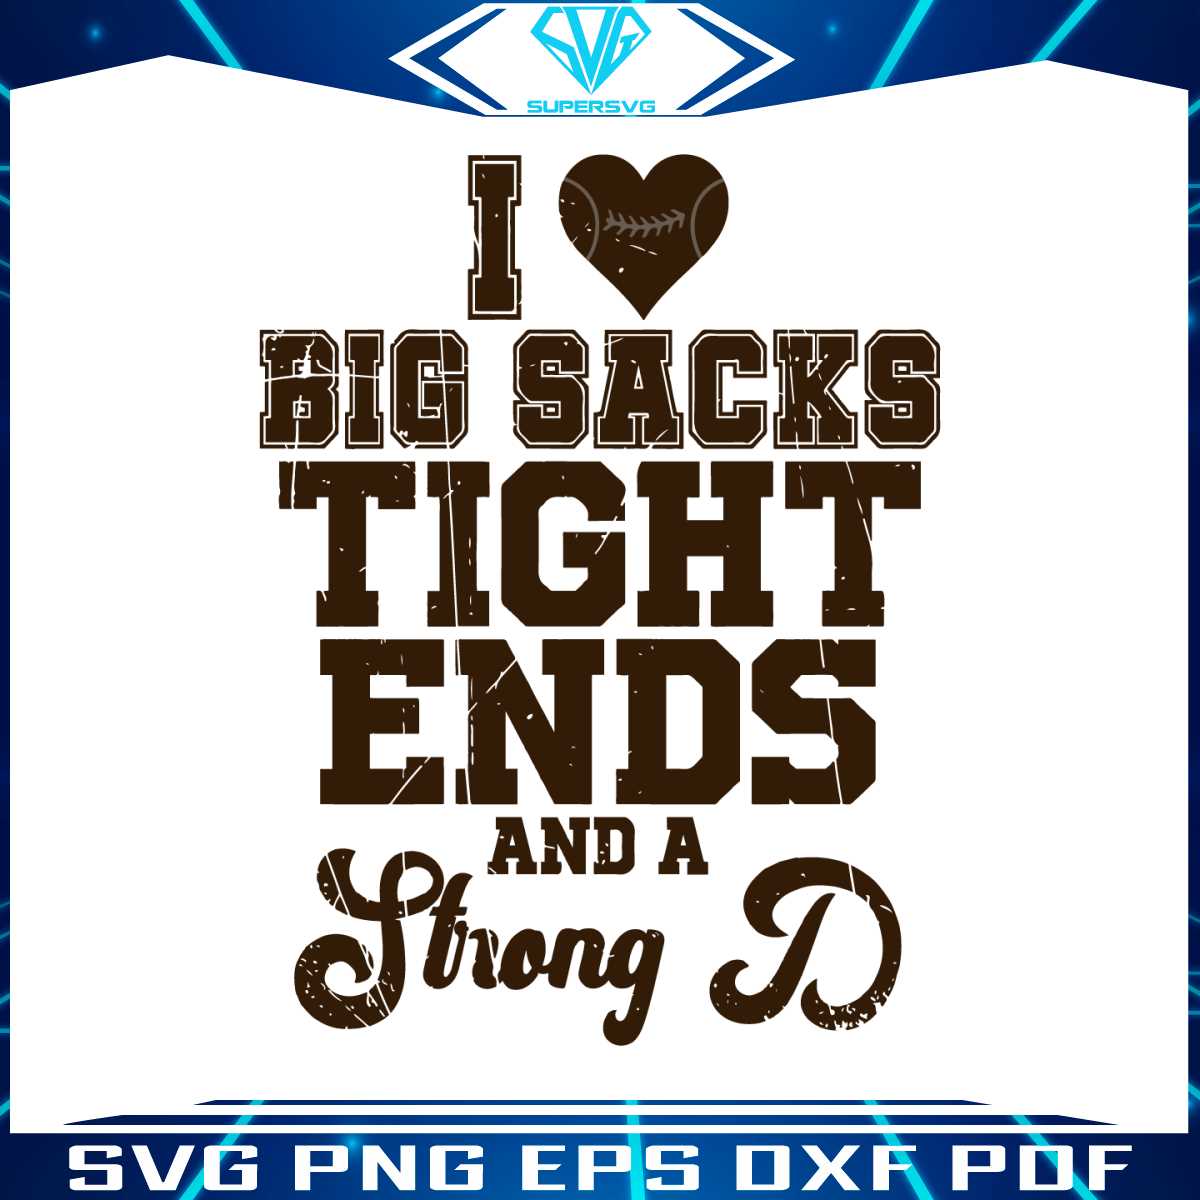 i-love-big-sacks-tight-ends-and-a-strong-svg-digital-cricut-file